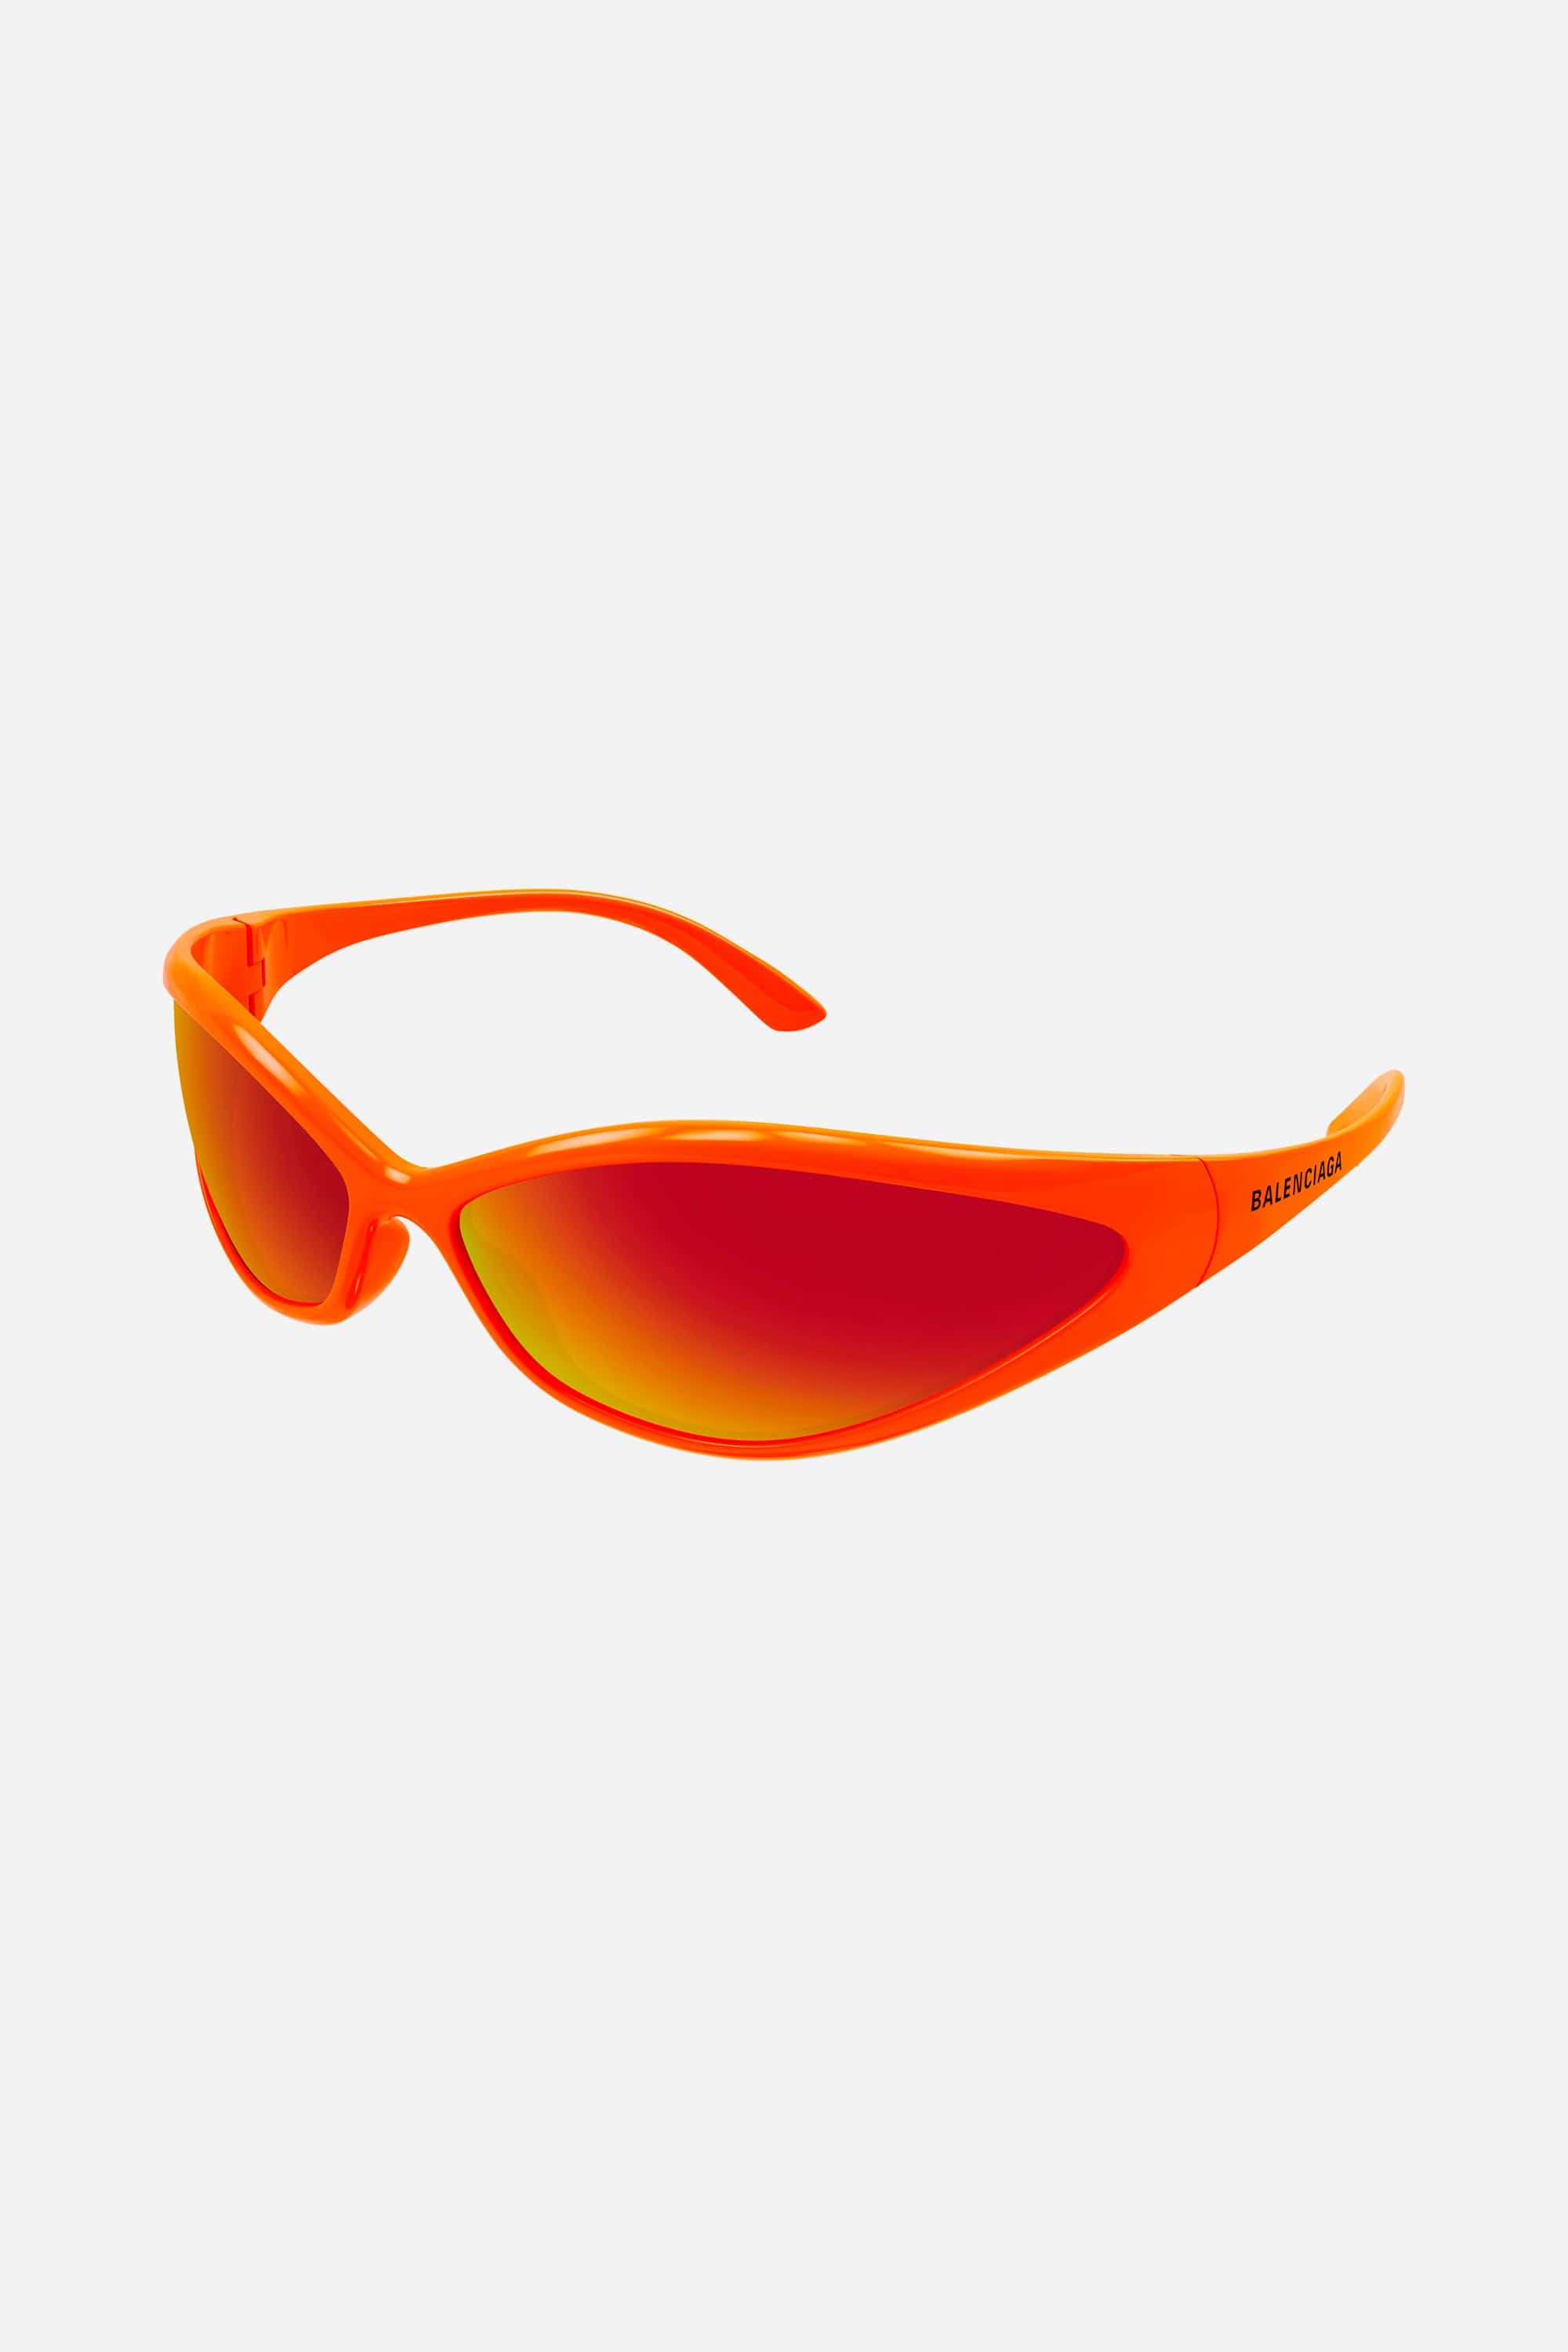 Balenciaga 90S oval sunglasses in fluo orange - Eyewear Club